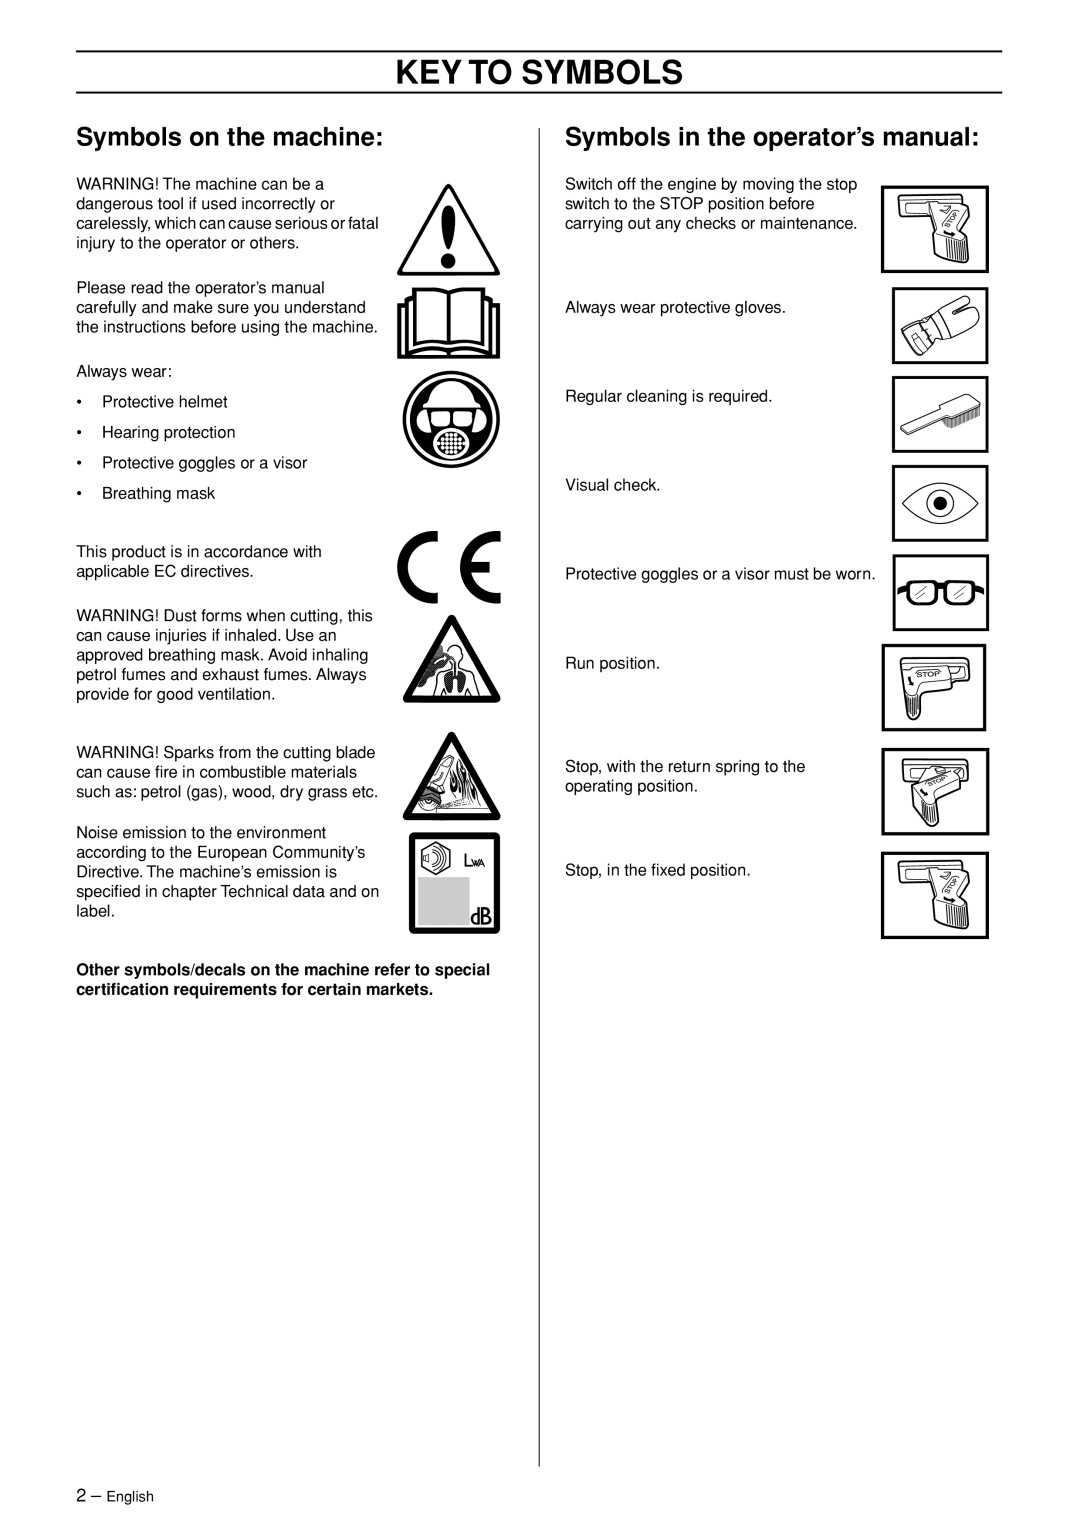 Husqvarna K960 Key To Symbols, Symbols on the machine, Symbols in the operator’s manual 